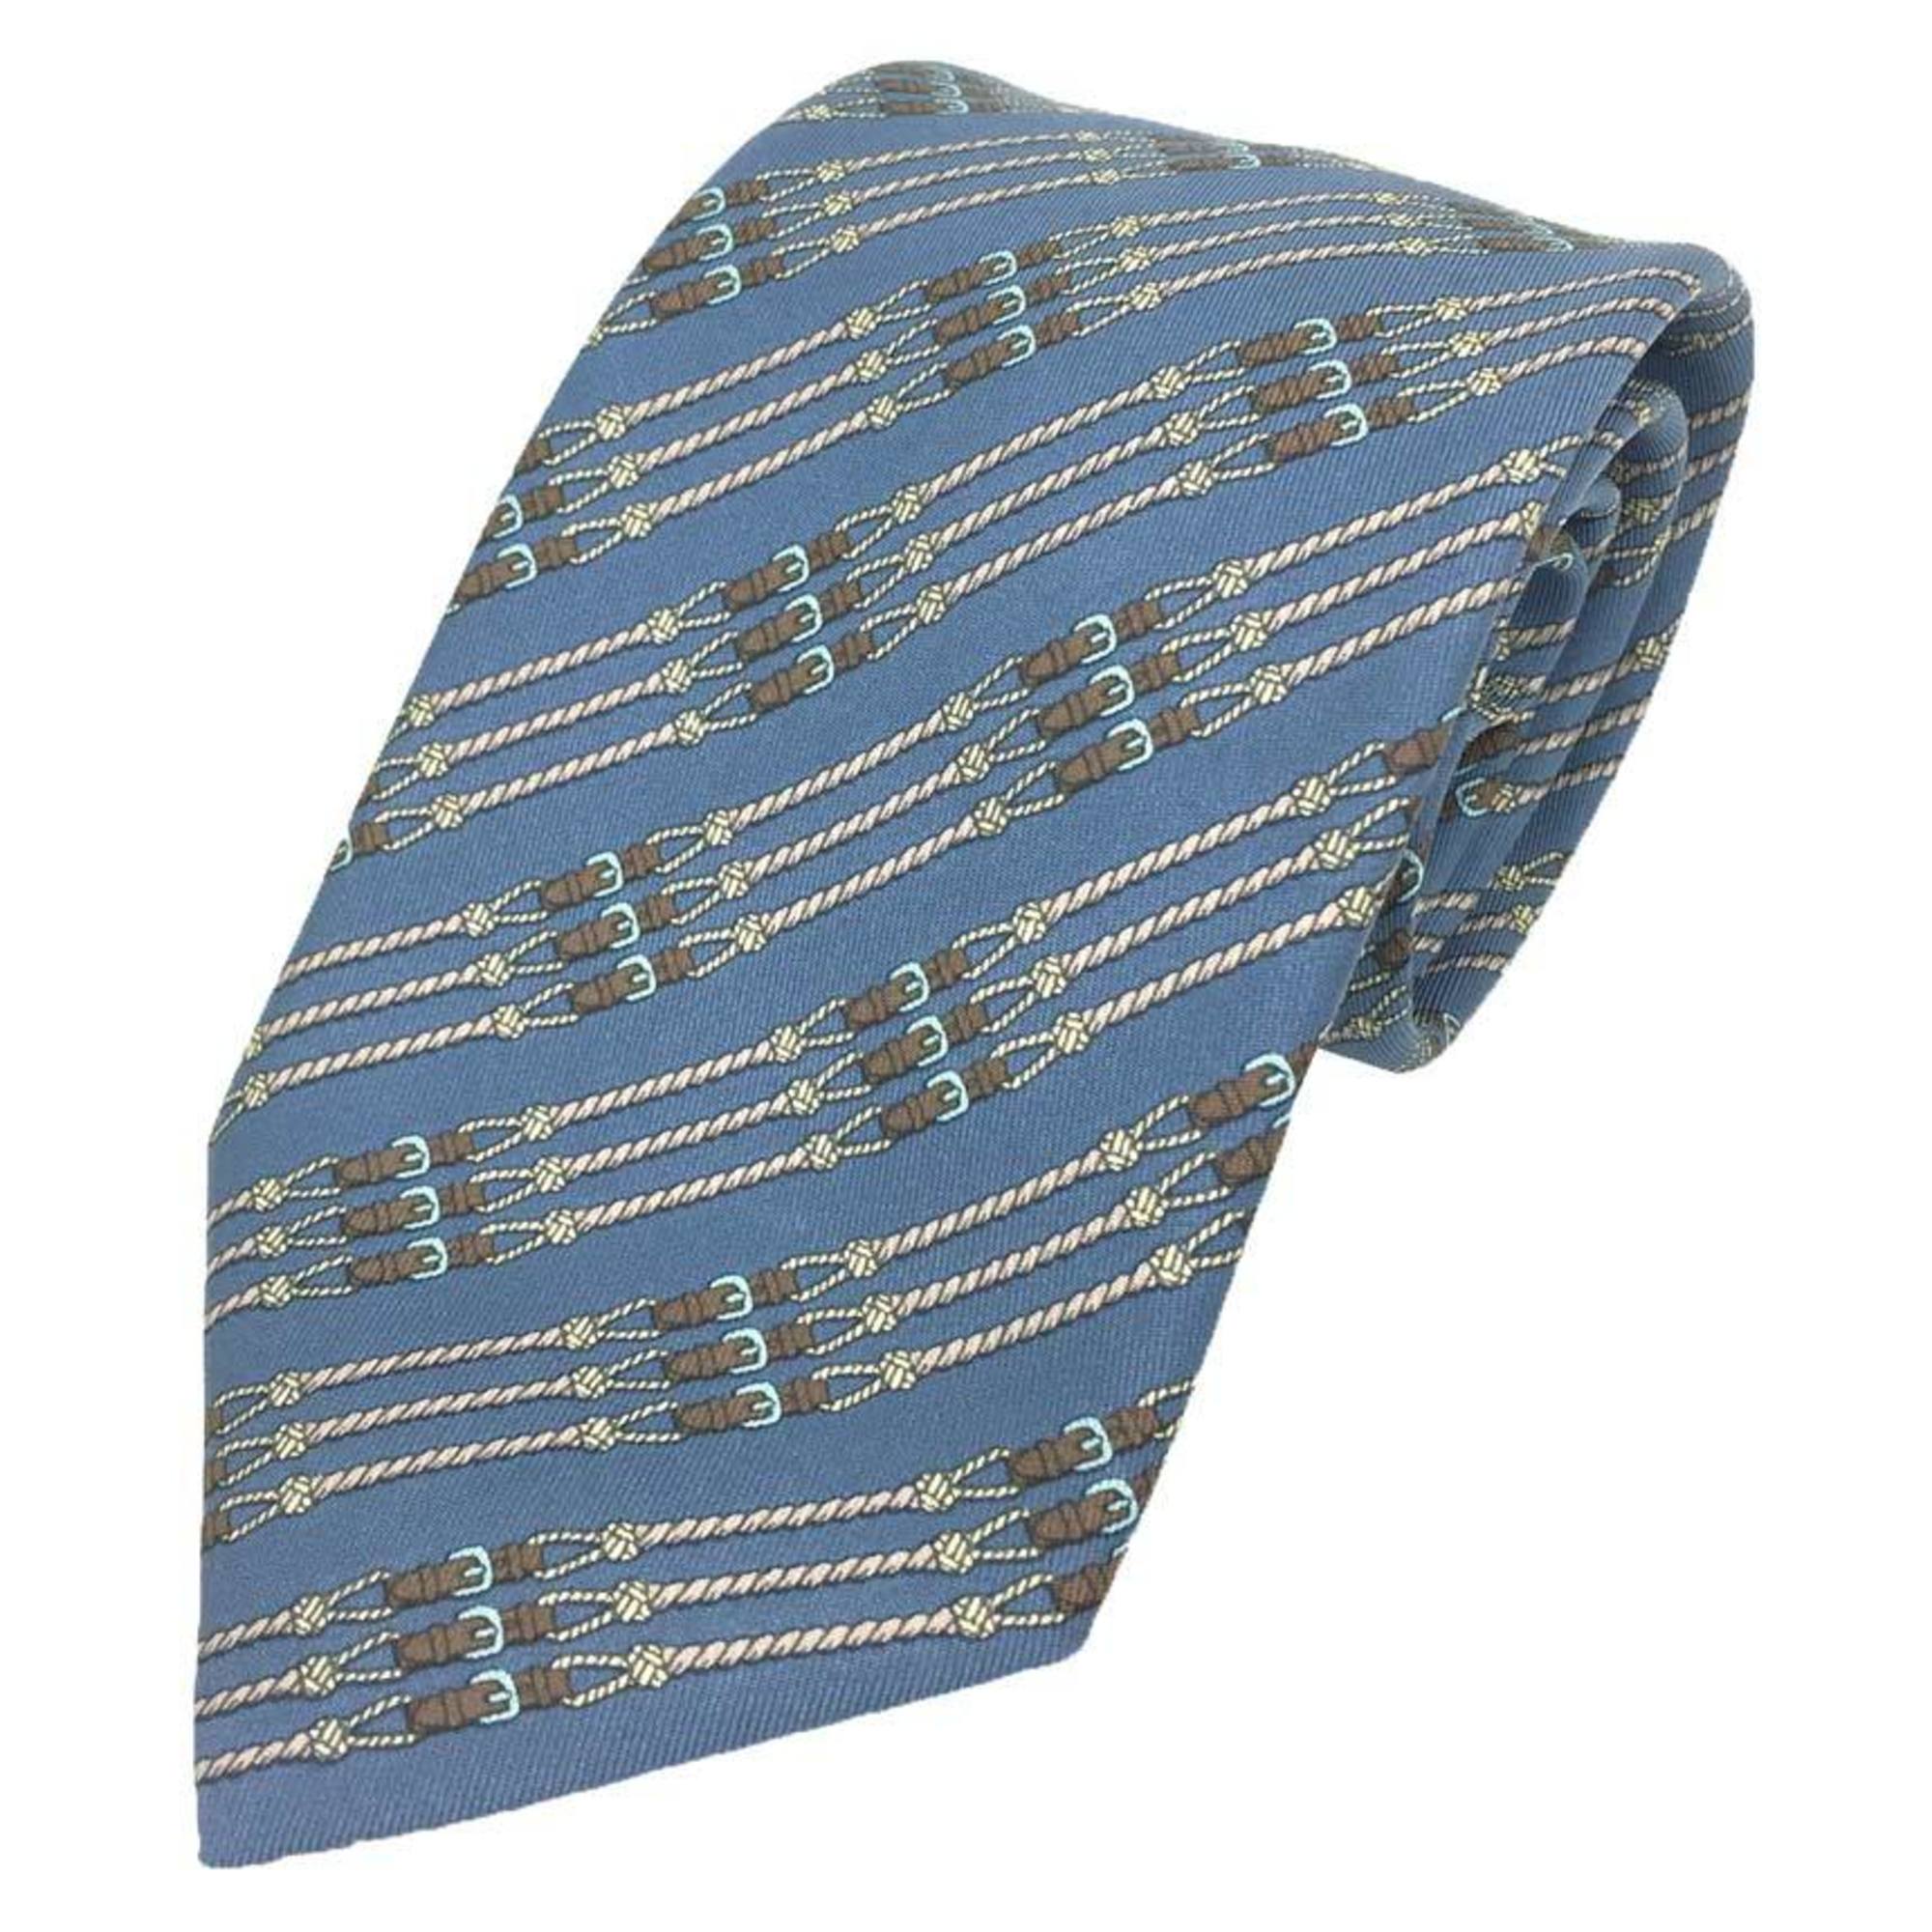 HERMES tie, blue, horse harness pattern, silk, for men, aq10129 10013480